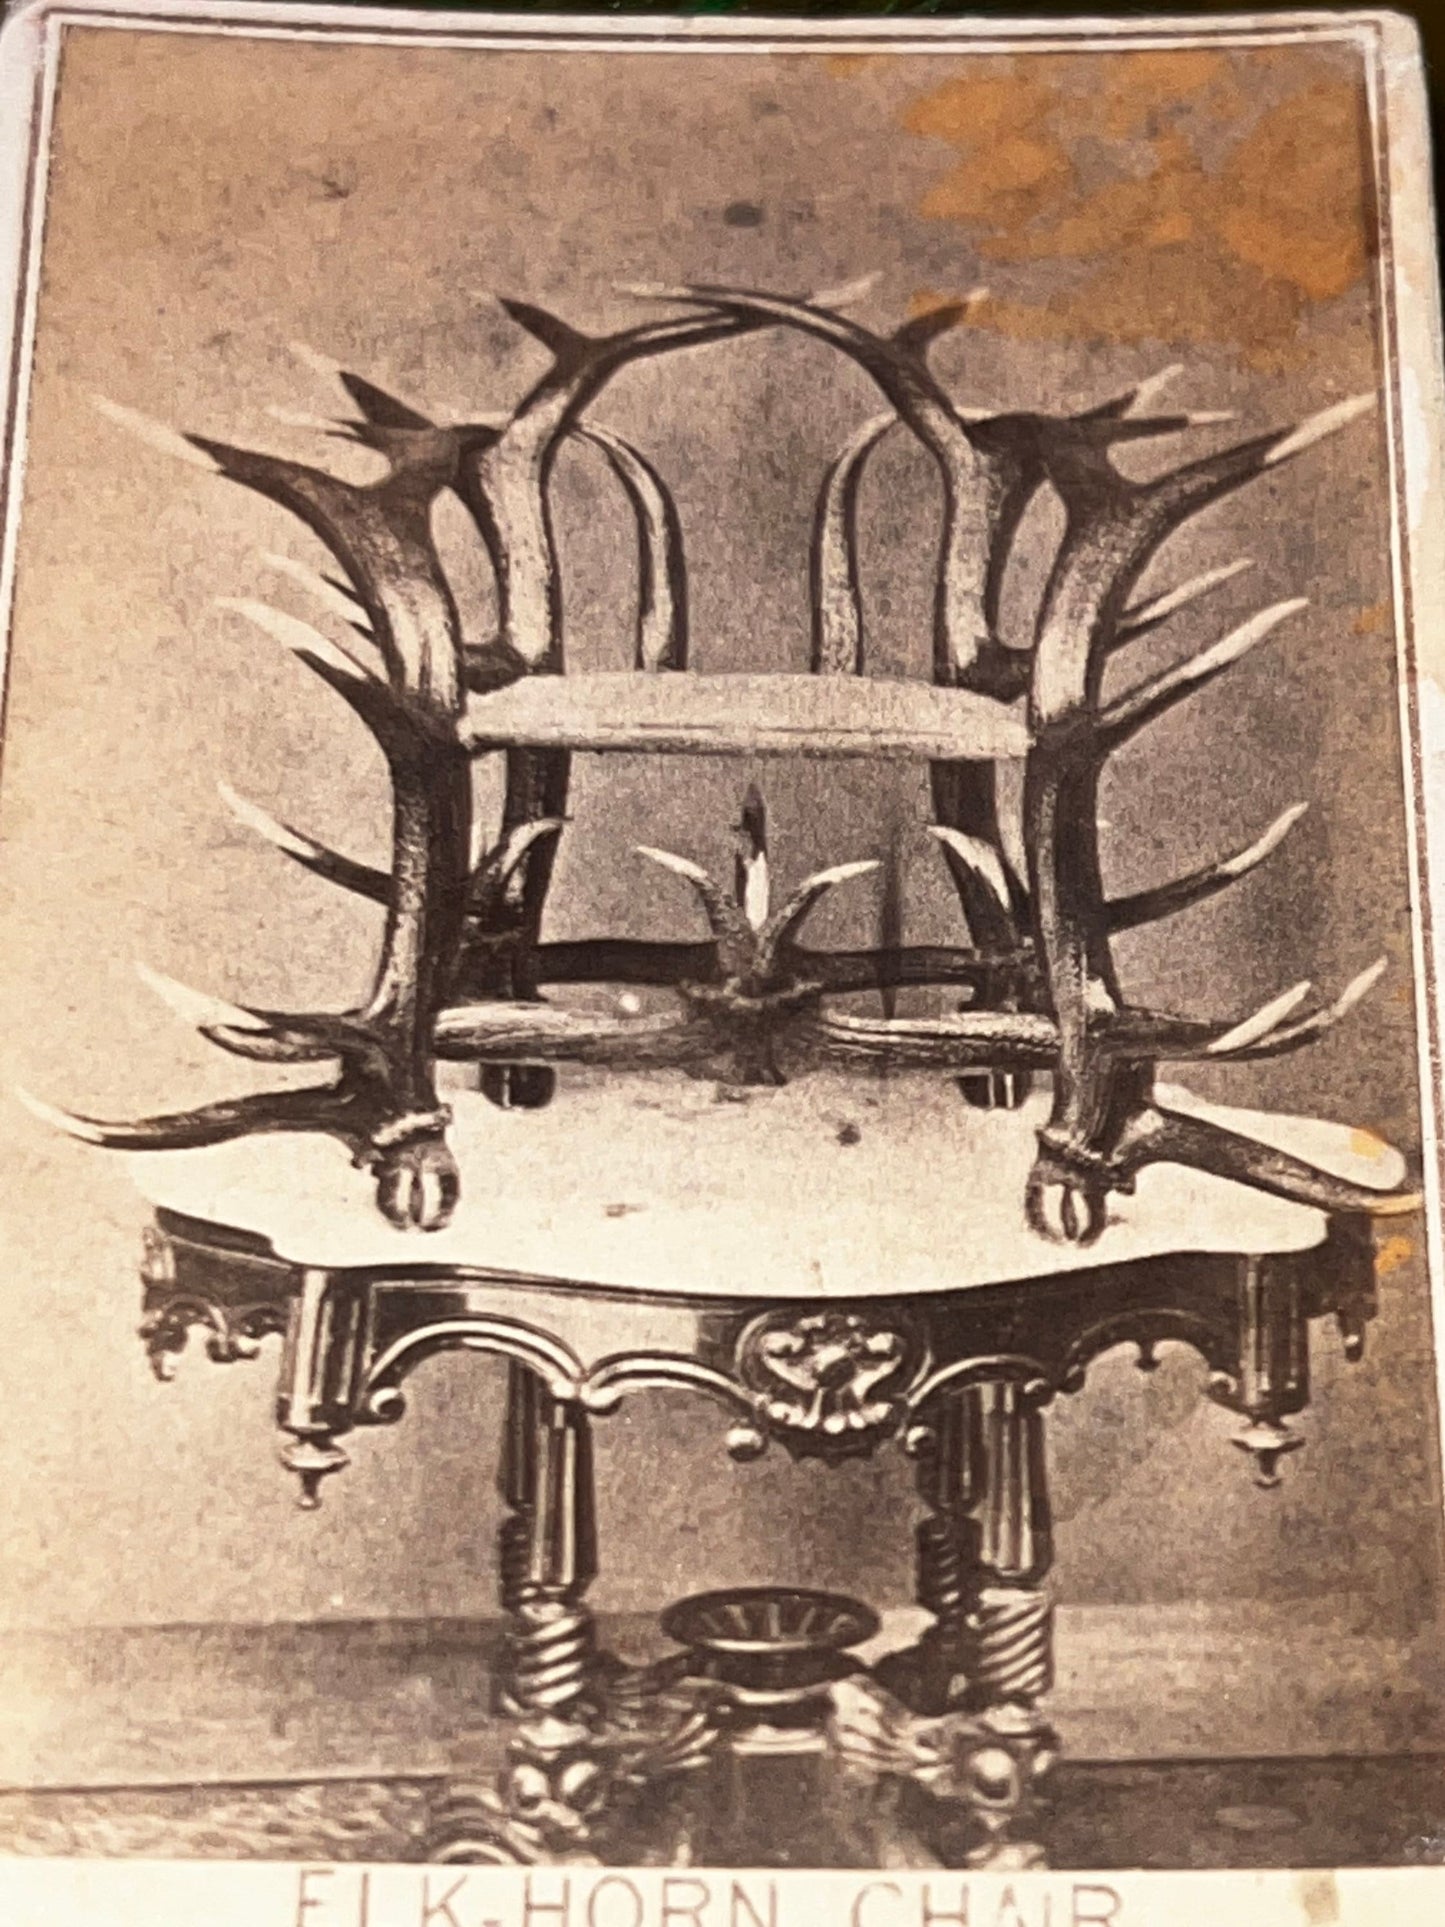 Antique cdv photo civil war era elk horn chair presented to president Abraham Lincoln 1864